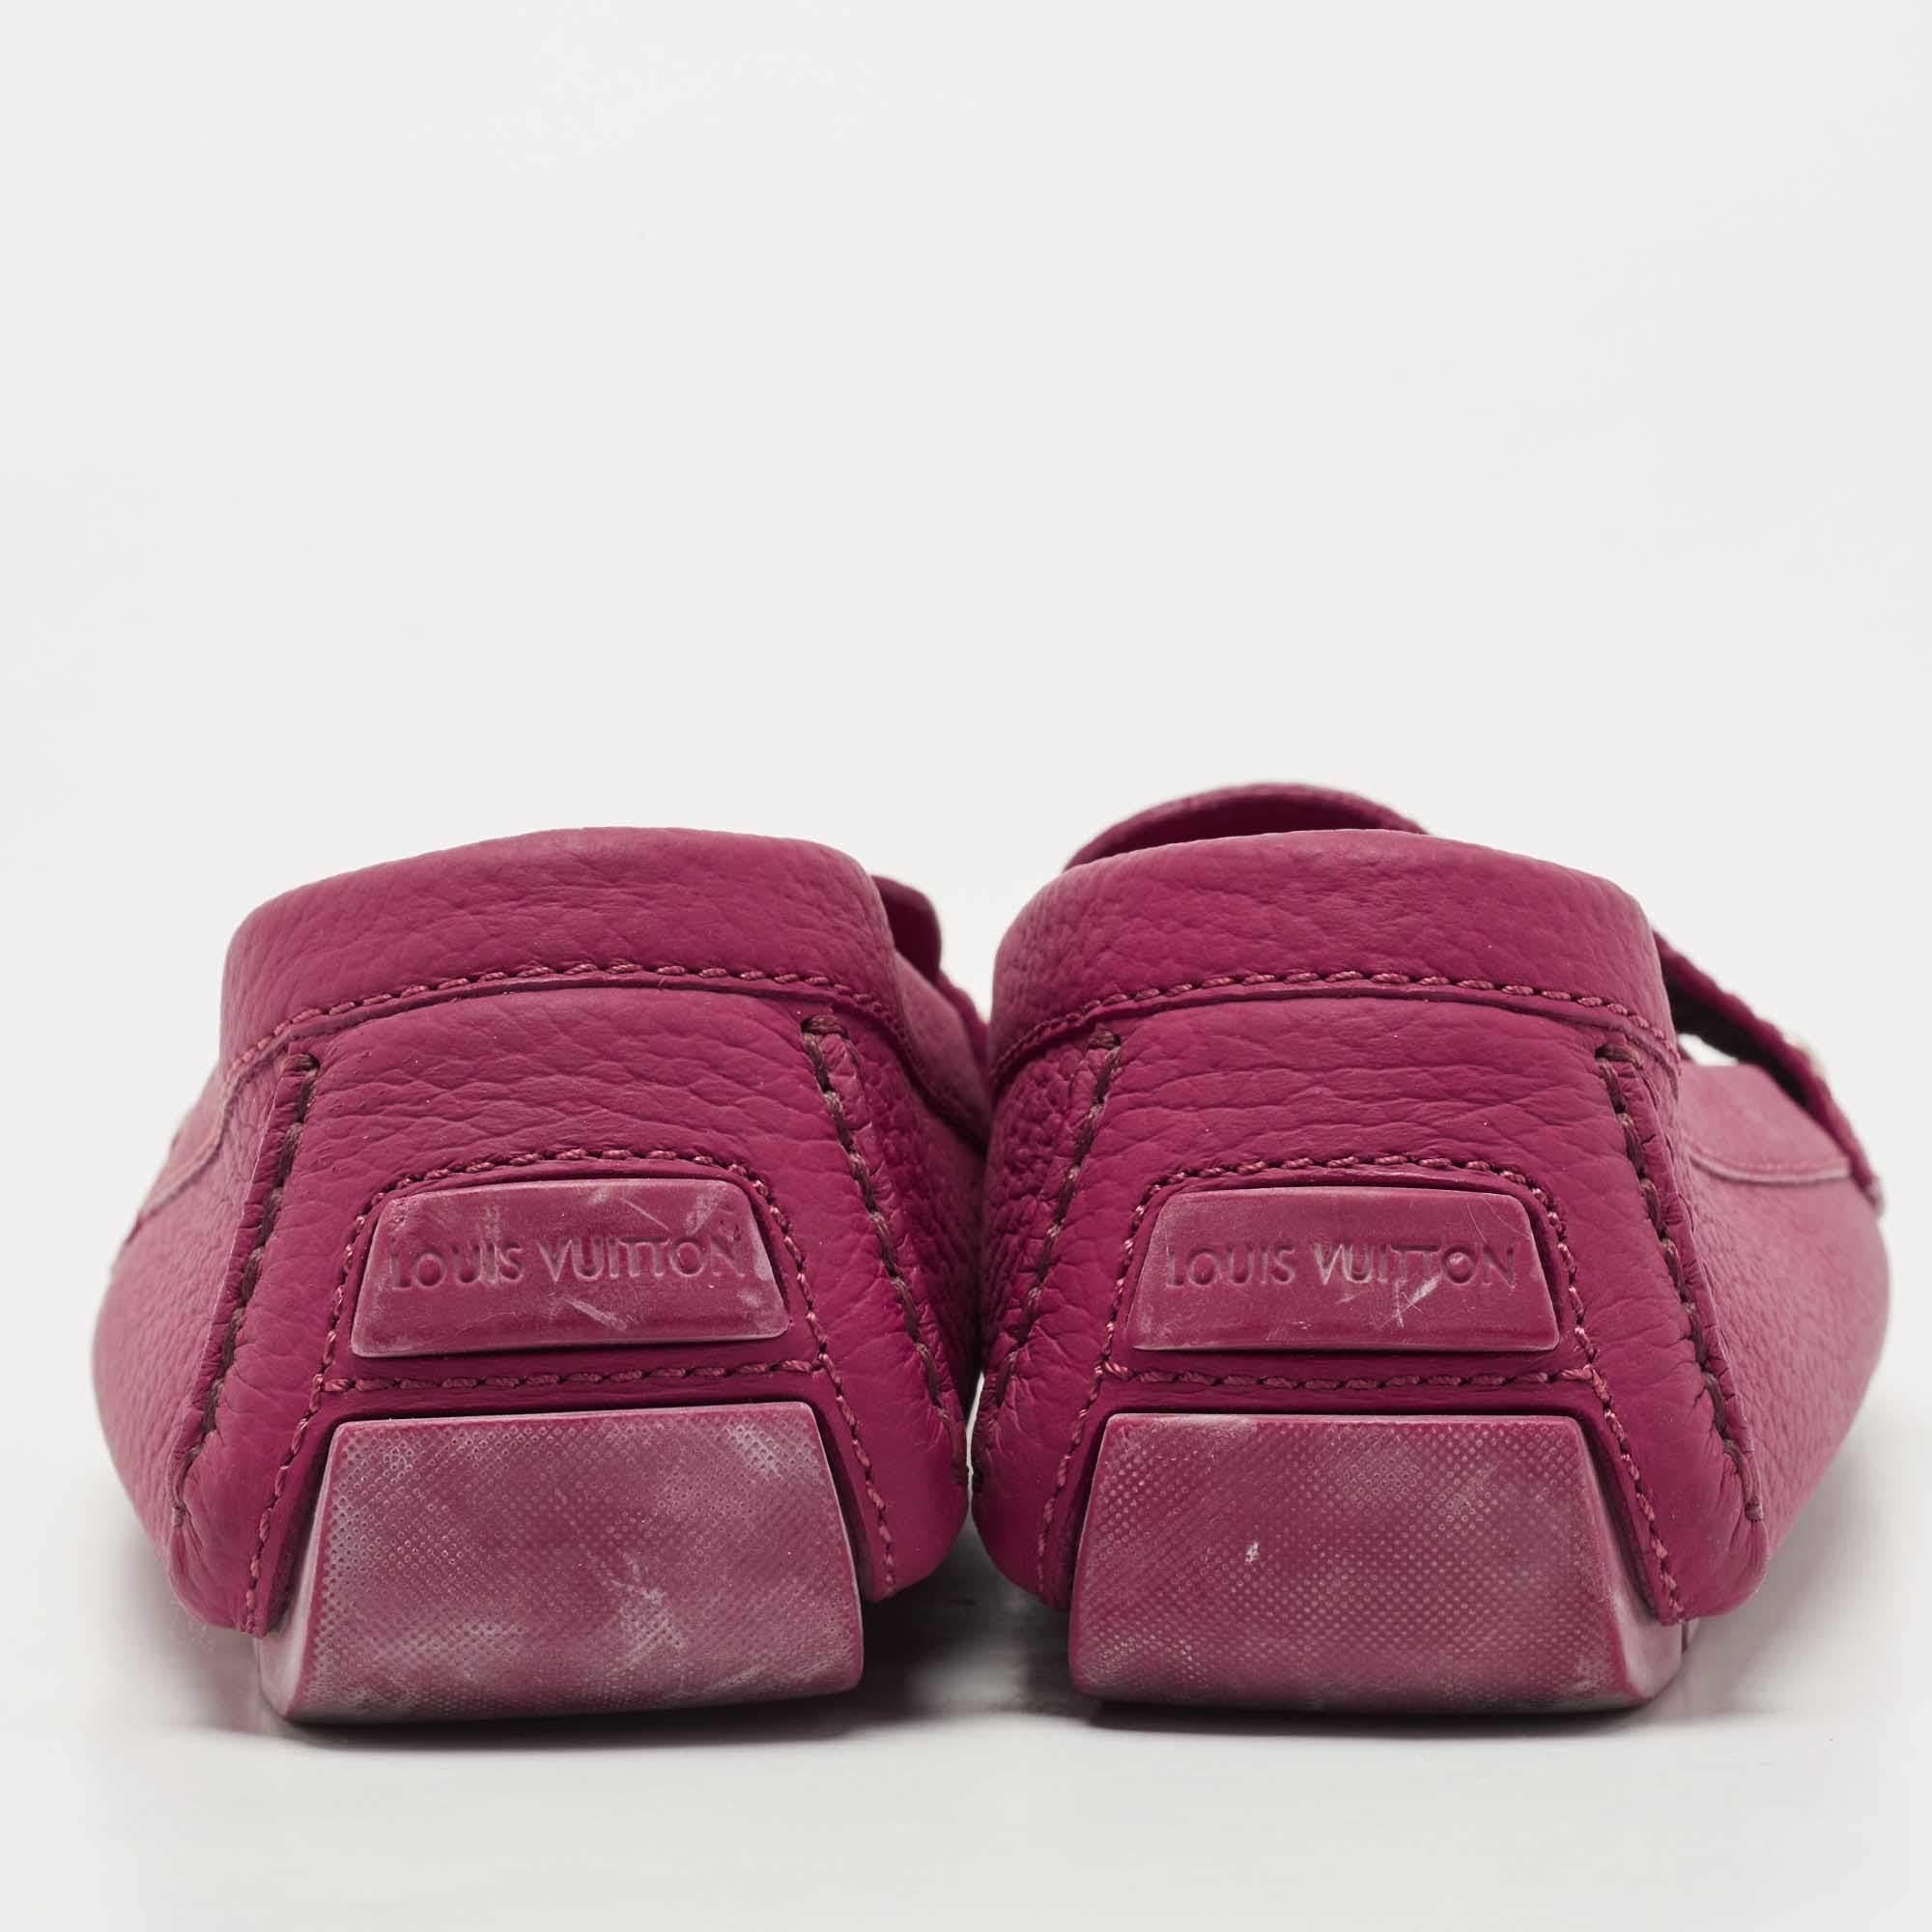 burgundy lv shoes